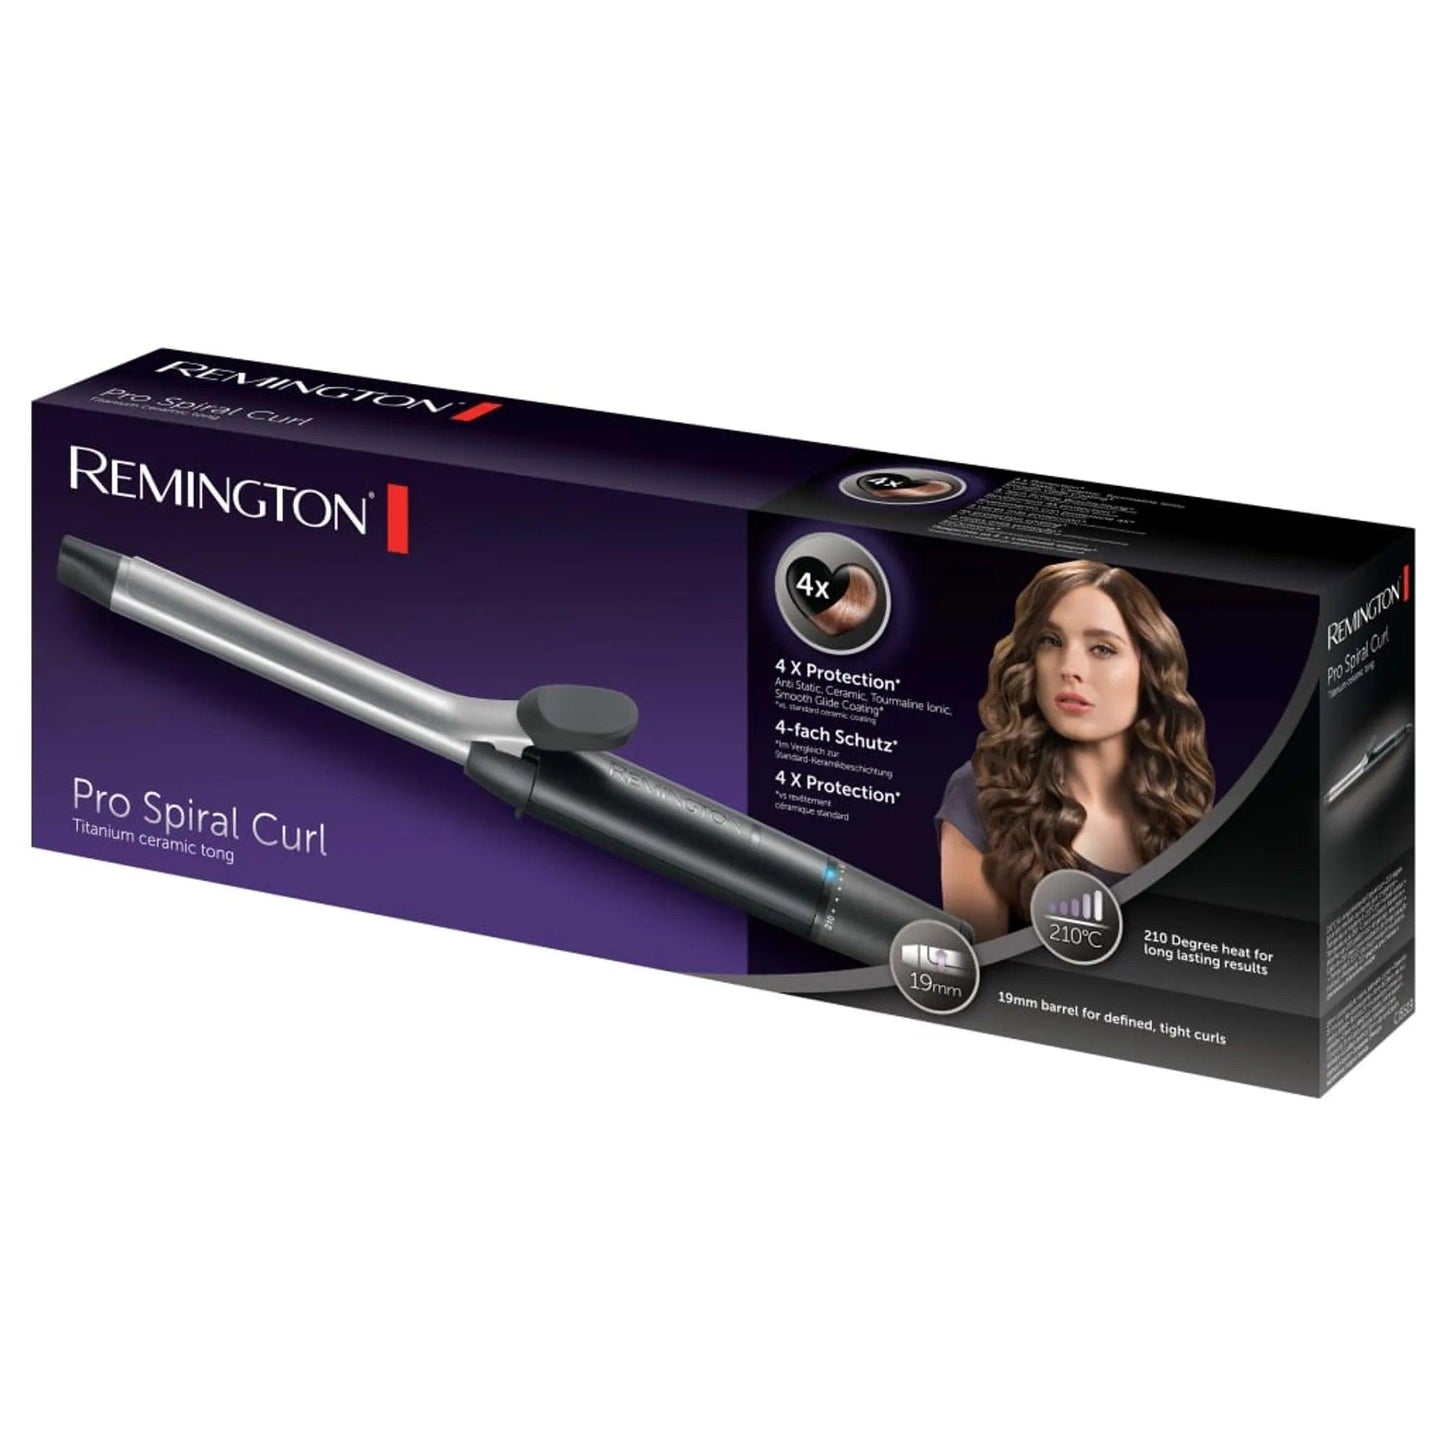 Remington Pro Spiral Curl CI5519 Curl wand, Black - Beauty Bounty